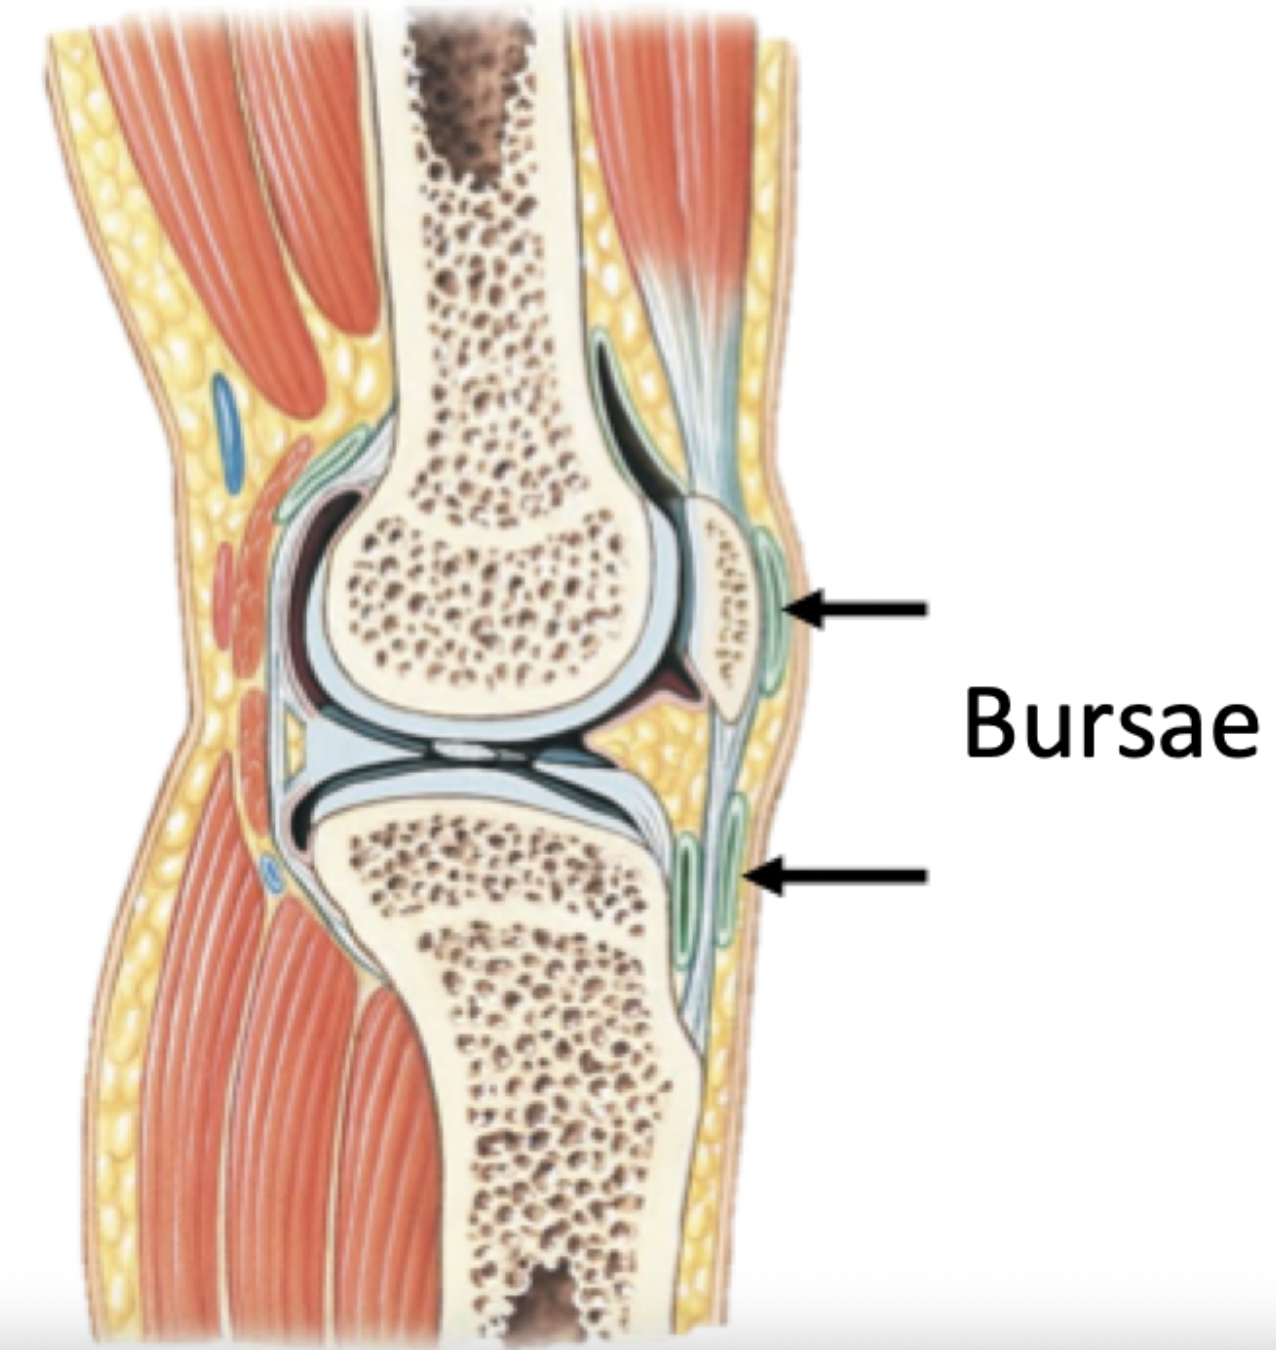 <p><strong>Bursa (bursae pl.)</strong></p><ul><li><p>Small fluid-filled pockets in connective tissue, occur around tendons and bones</p></li><li><p>Filled with synovial fluid, lined by a synovial membrane</p></li><li><p>Reduce friction</p></li><li><p>Act as shock absorbers</p></li></ul>